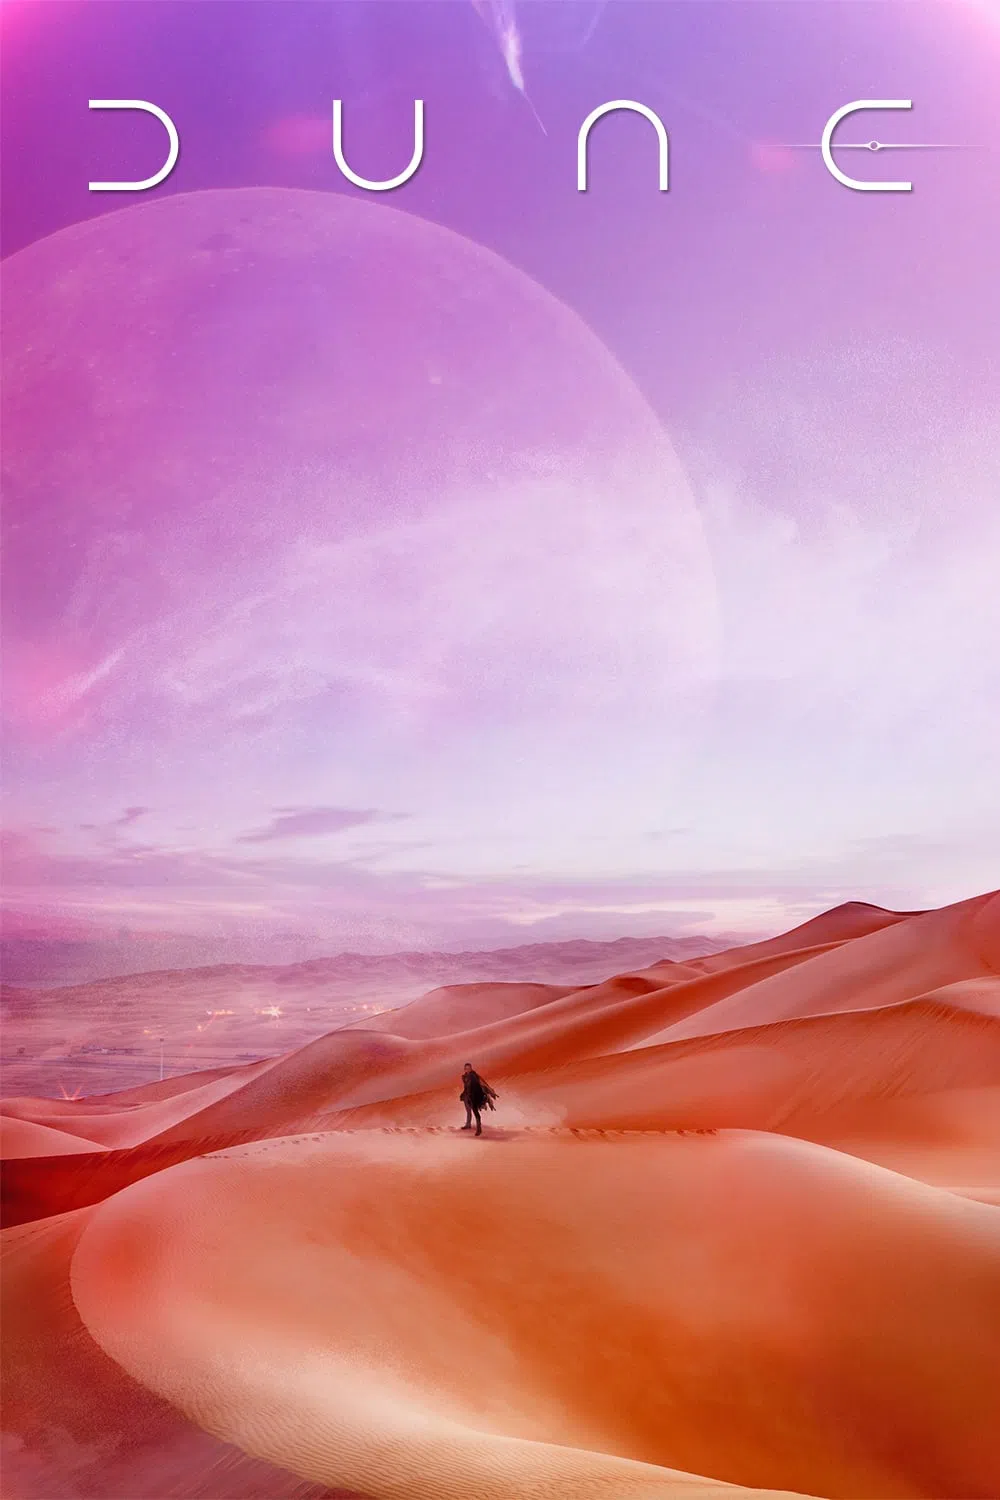 Dune poster